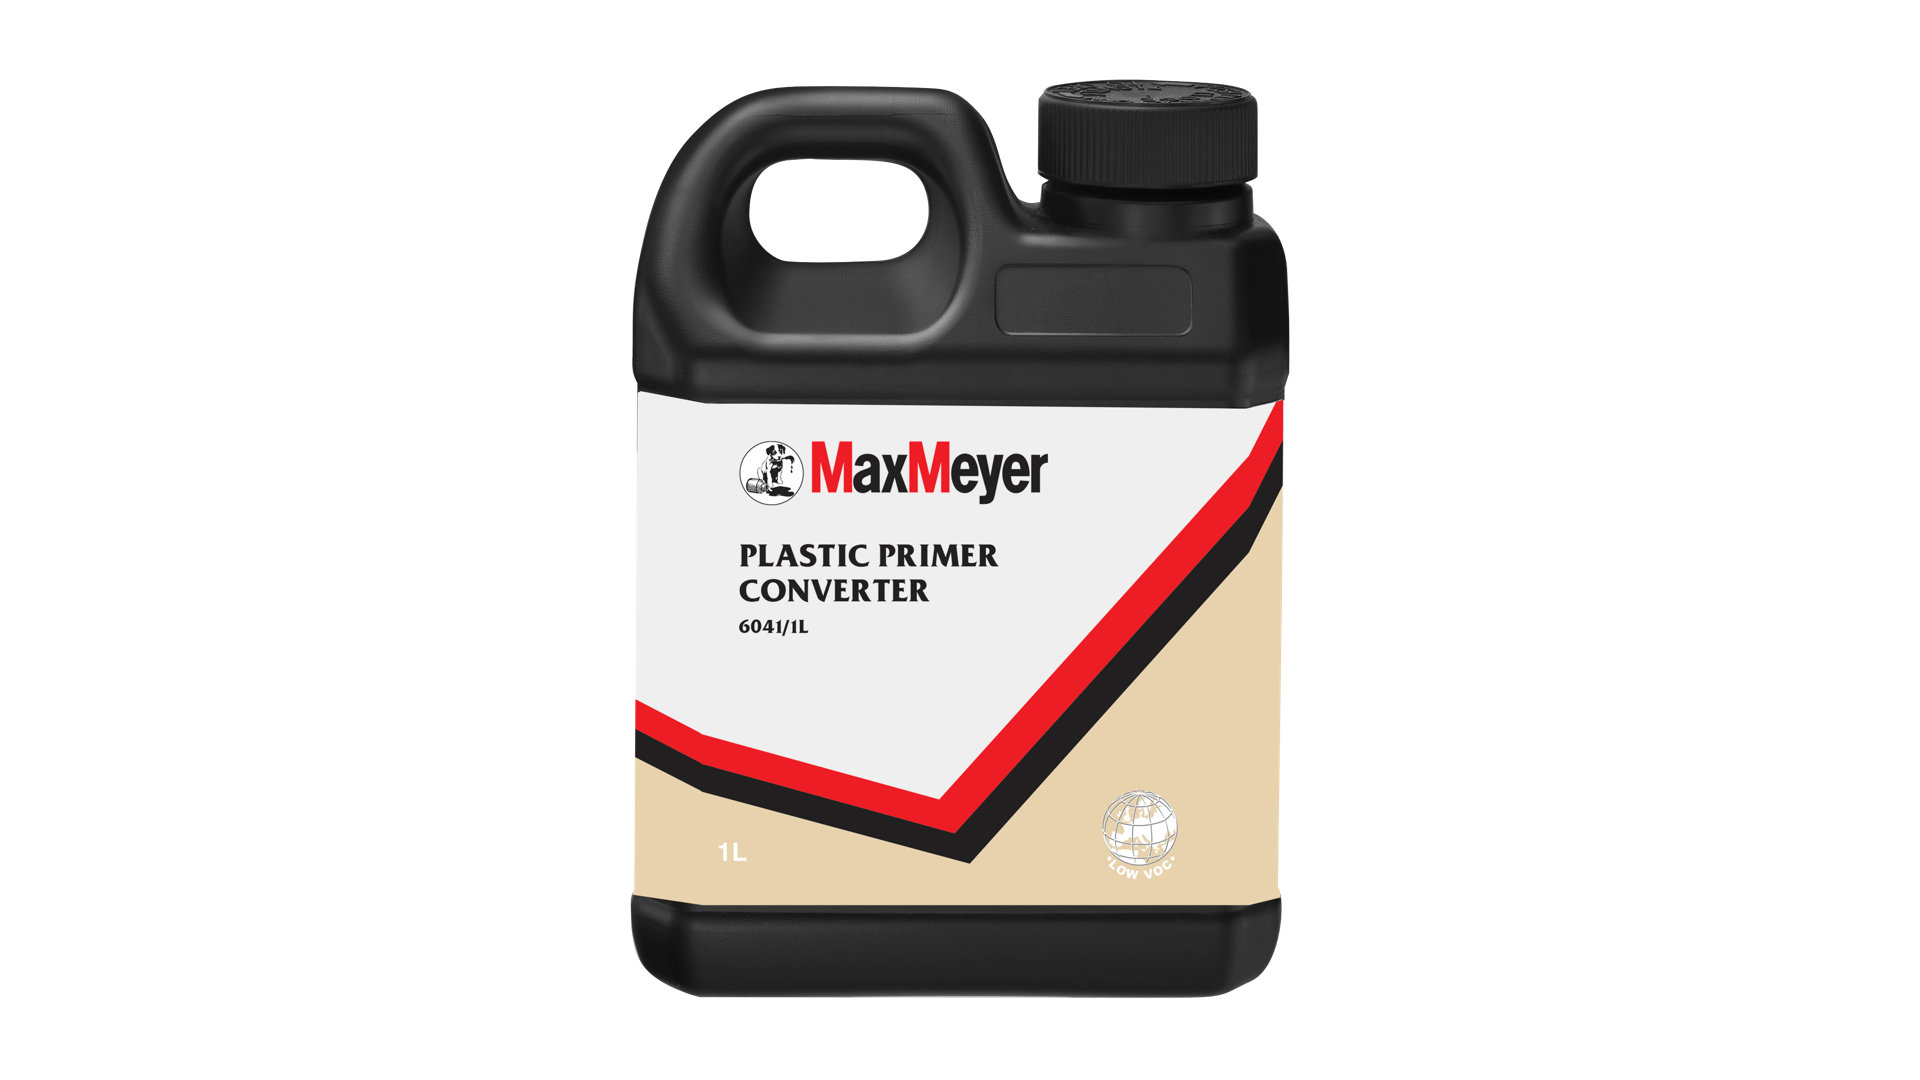 6041 MaxMeyer Plastic Primer Converter Launched In Australia